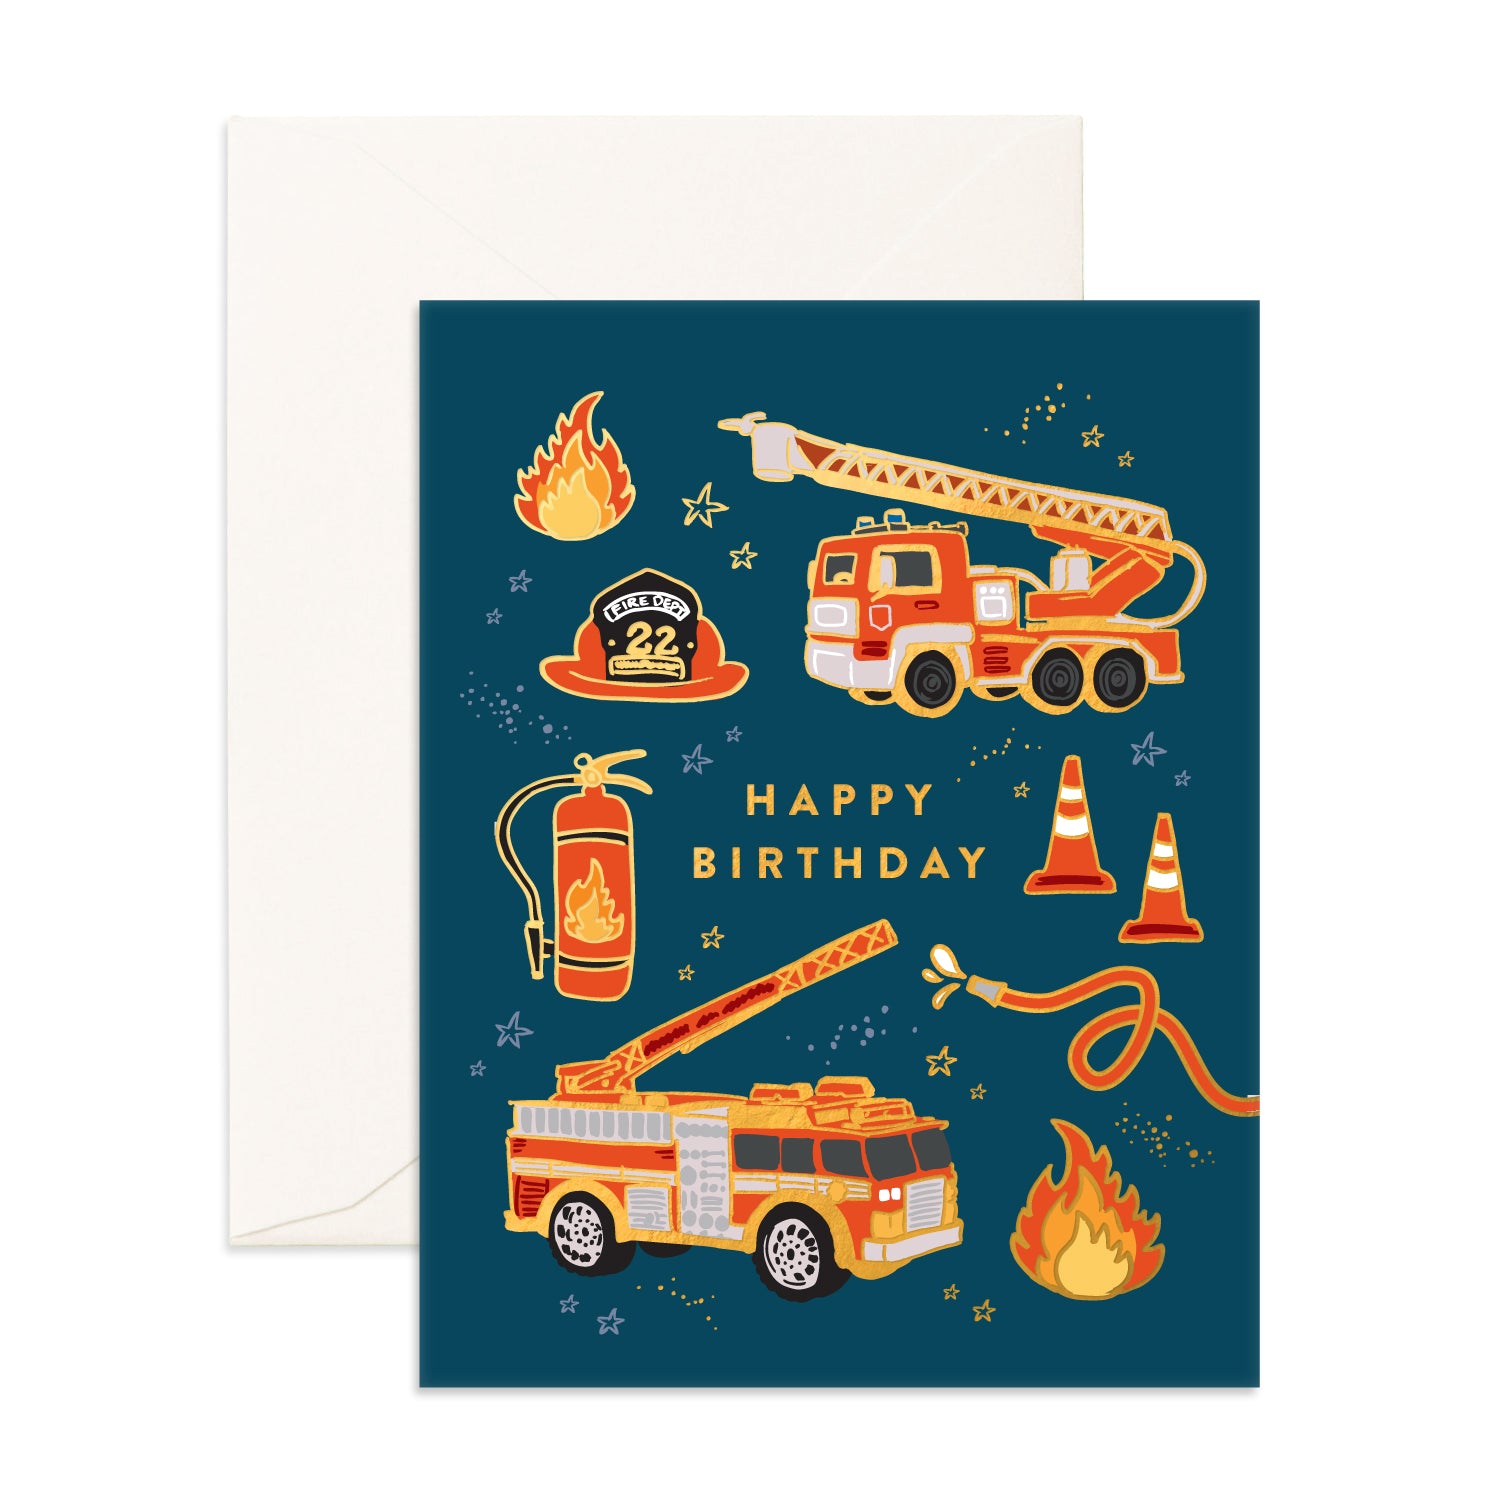 Fox and Fallow Greetings Card - Happy Birthday (Fire Trucks)